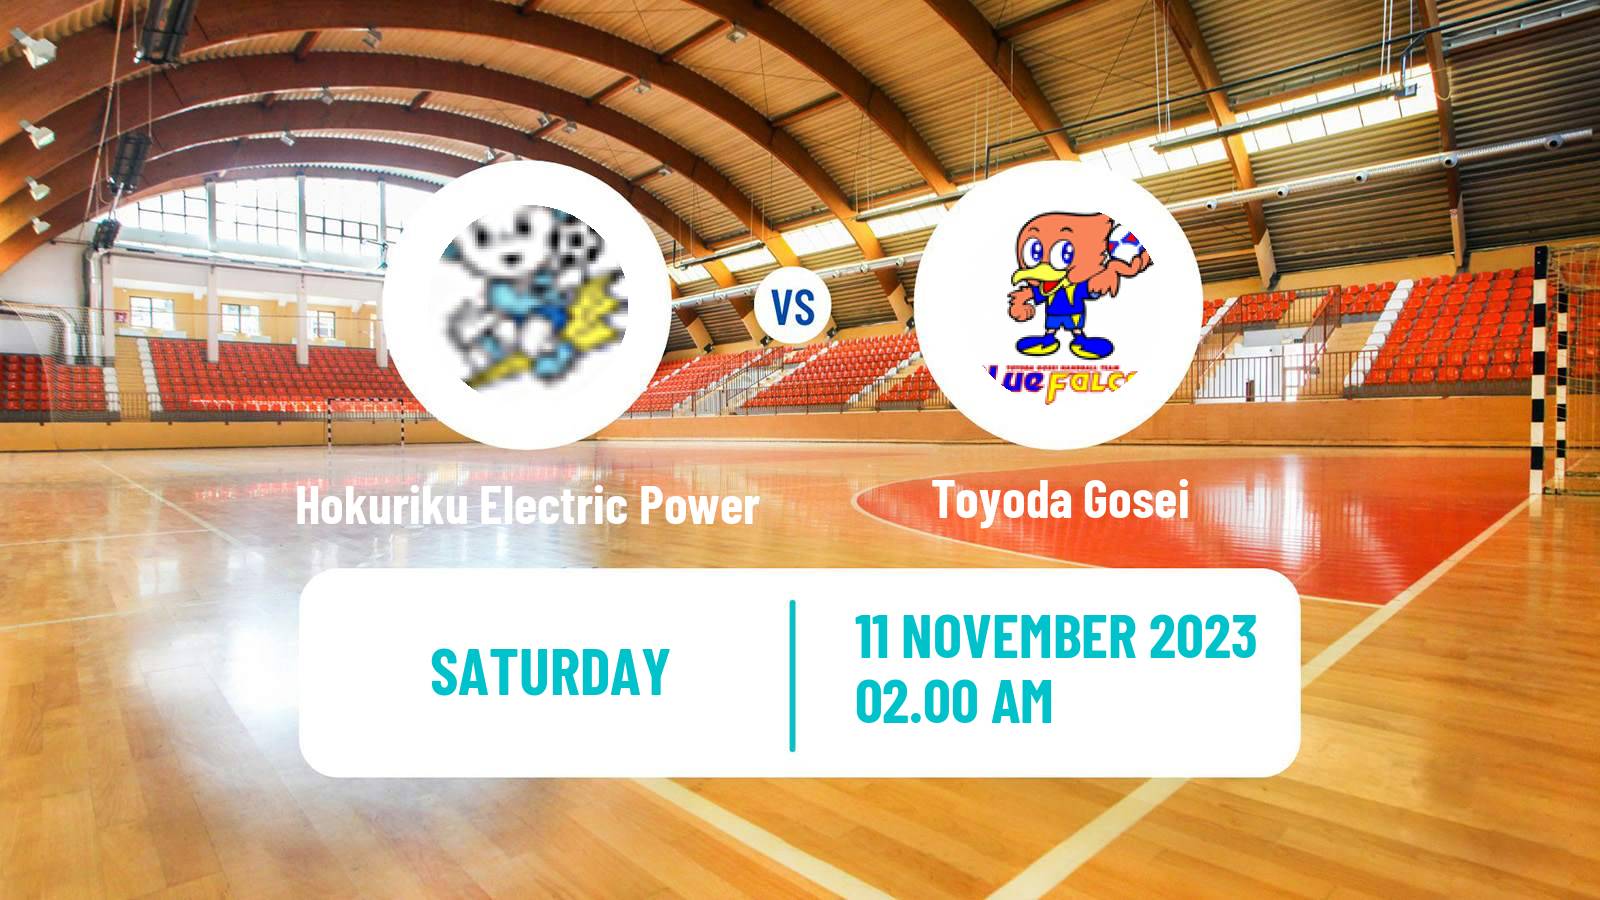 Handball Japan JHL Handball Hokuriku Electric Power - Toyoda Gosei